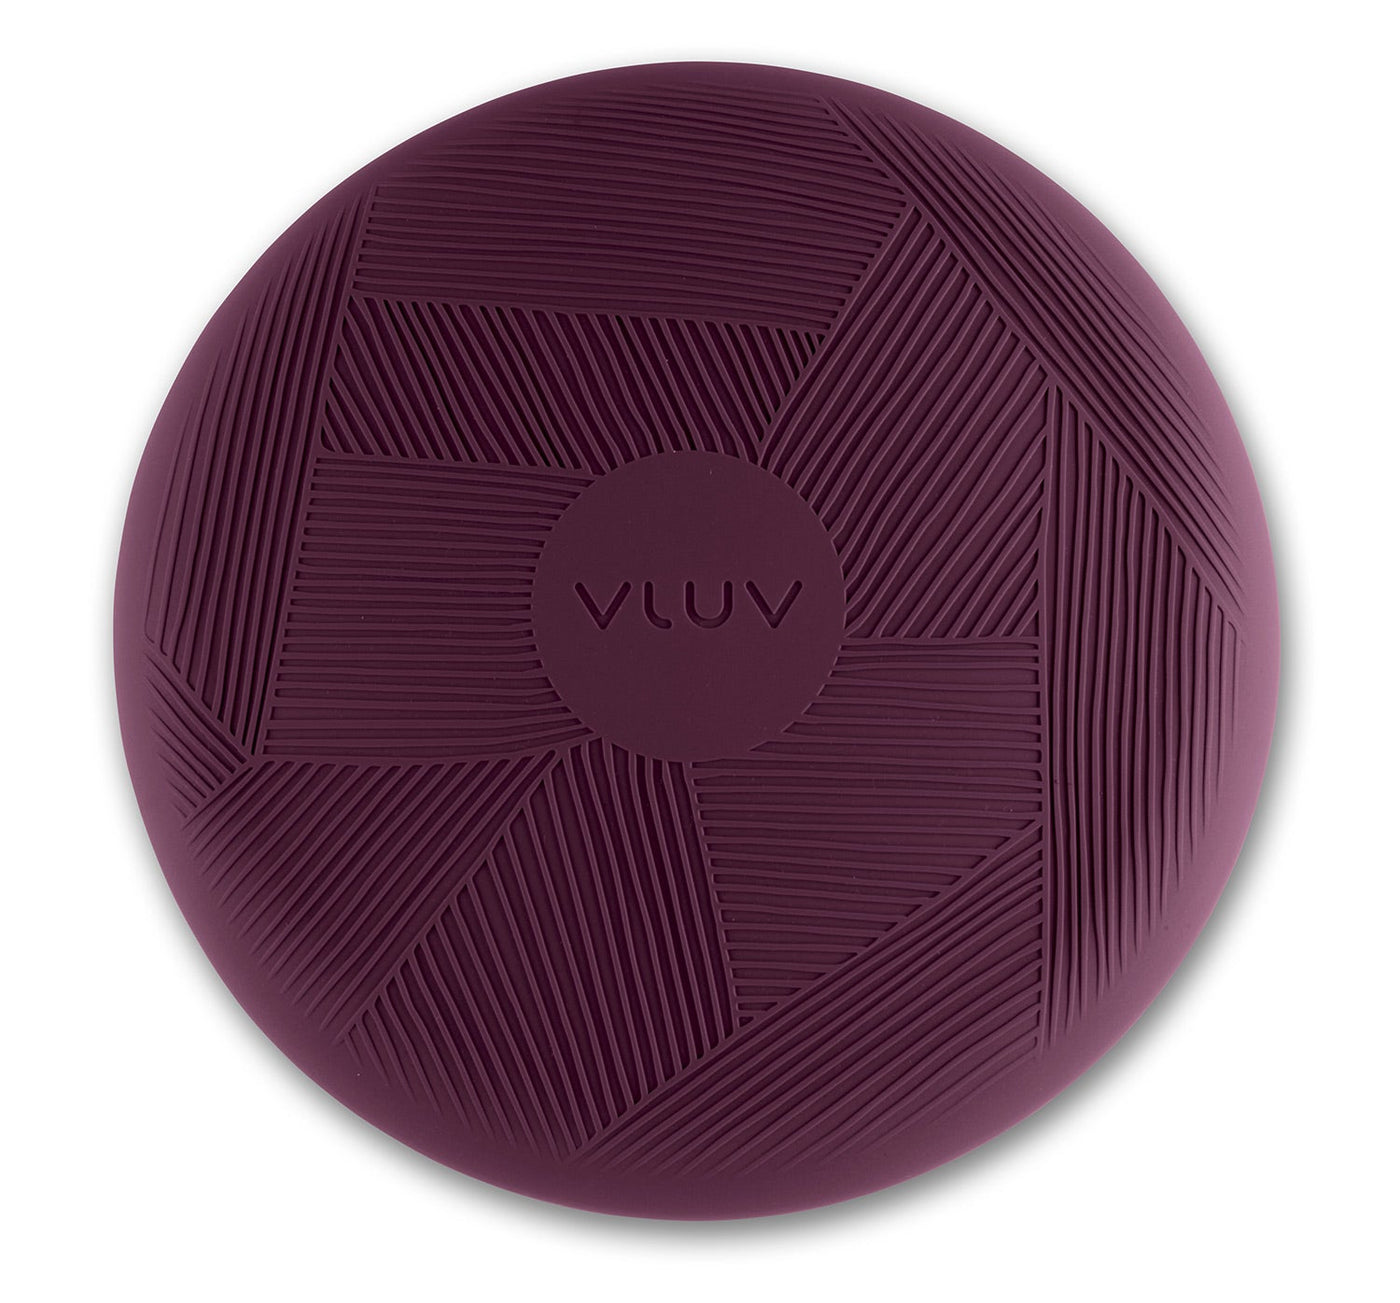 Vluv - VLUV PED Balancekissen 36cm in 3 Farben - Blackberry - 123HomeOffice